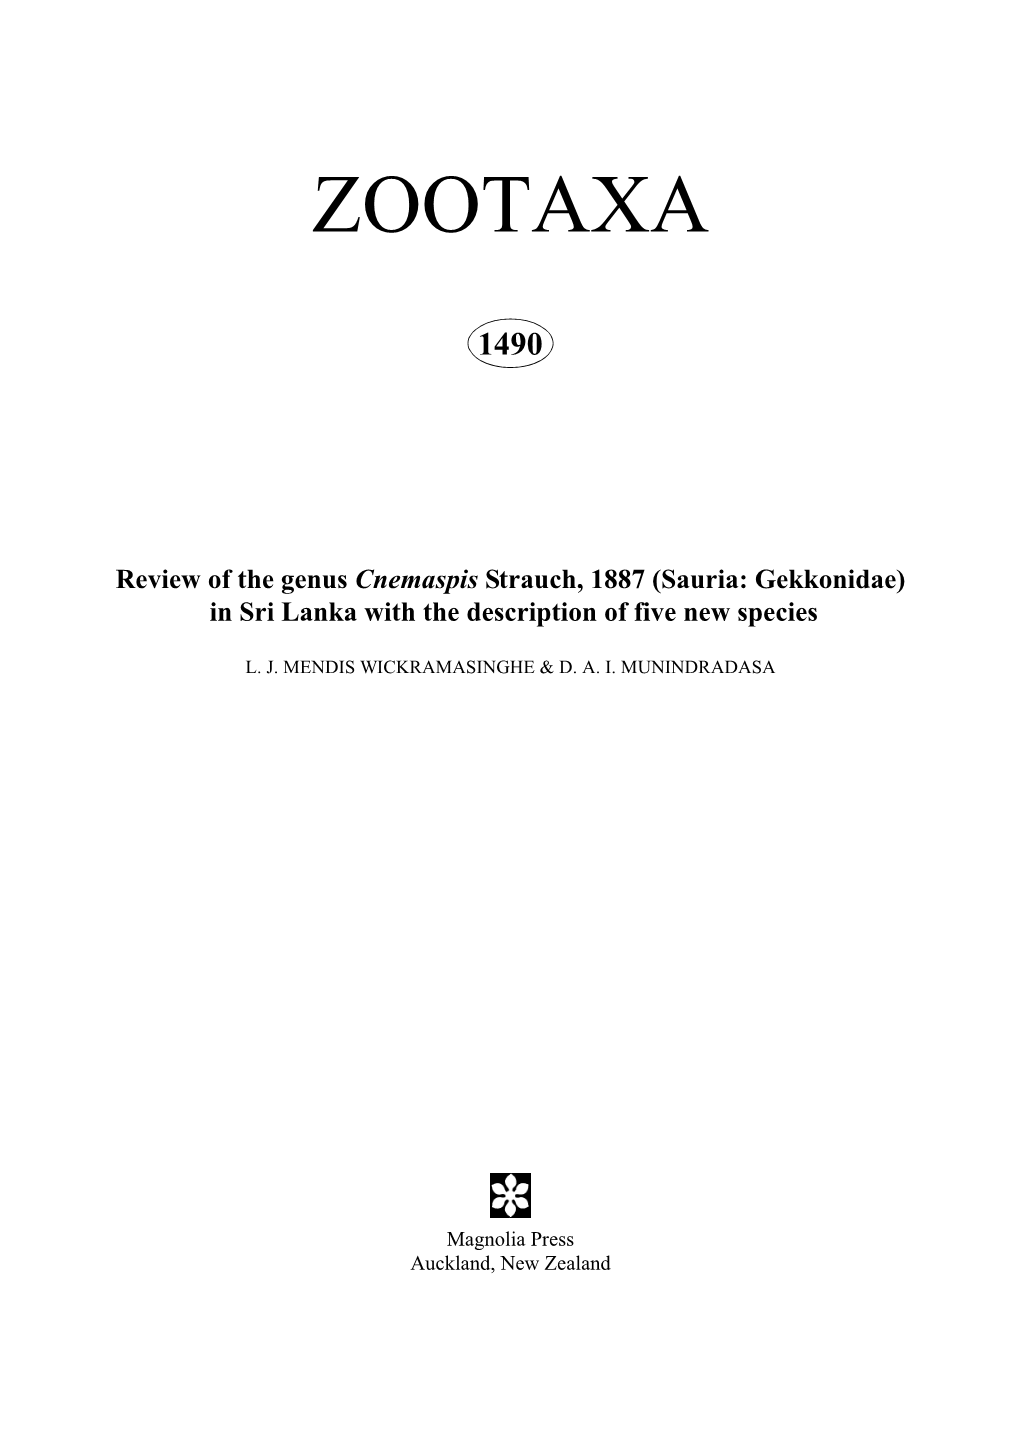 Zootaxa, Review of the Genus Cnemaspis Strauch, 1887